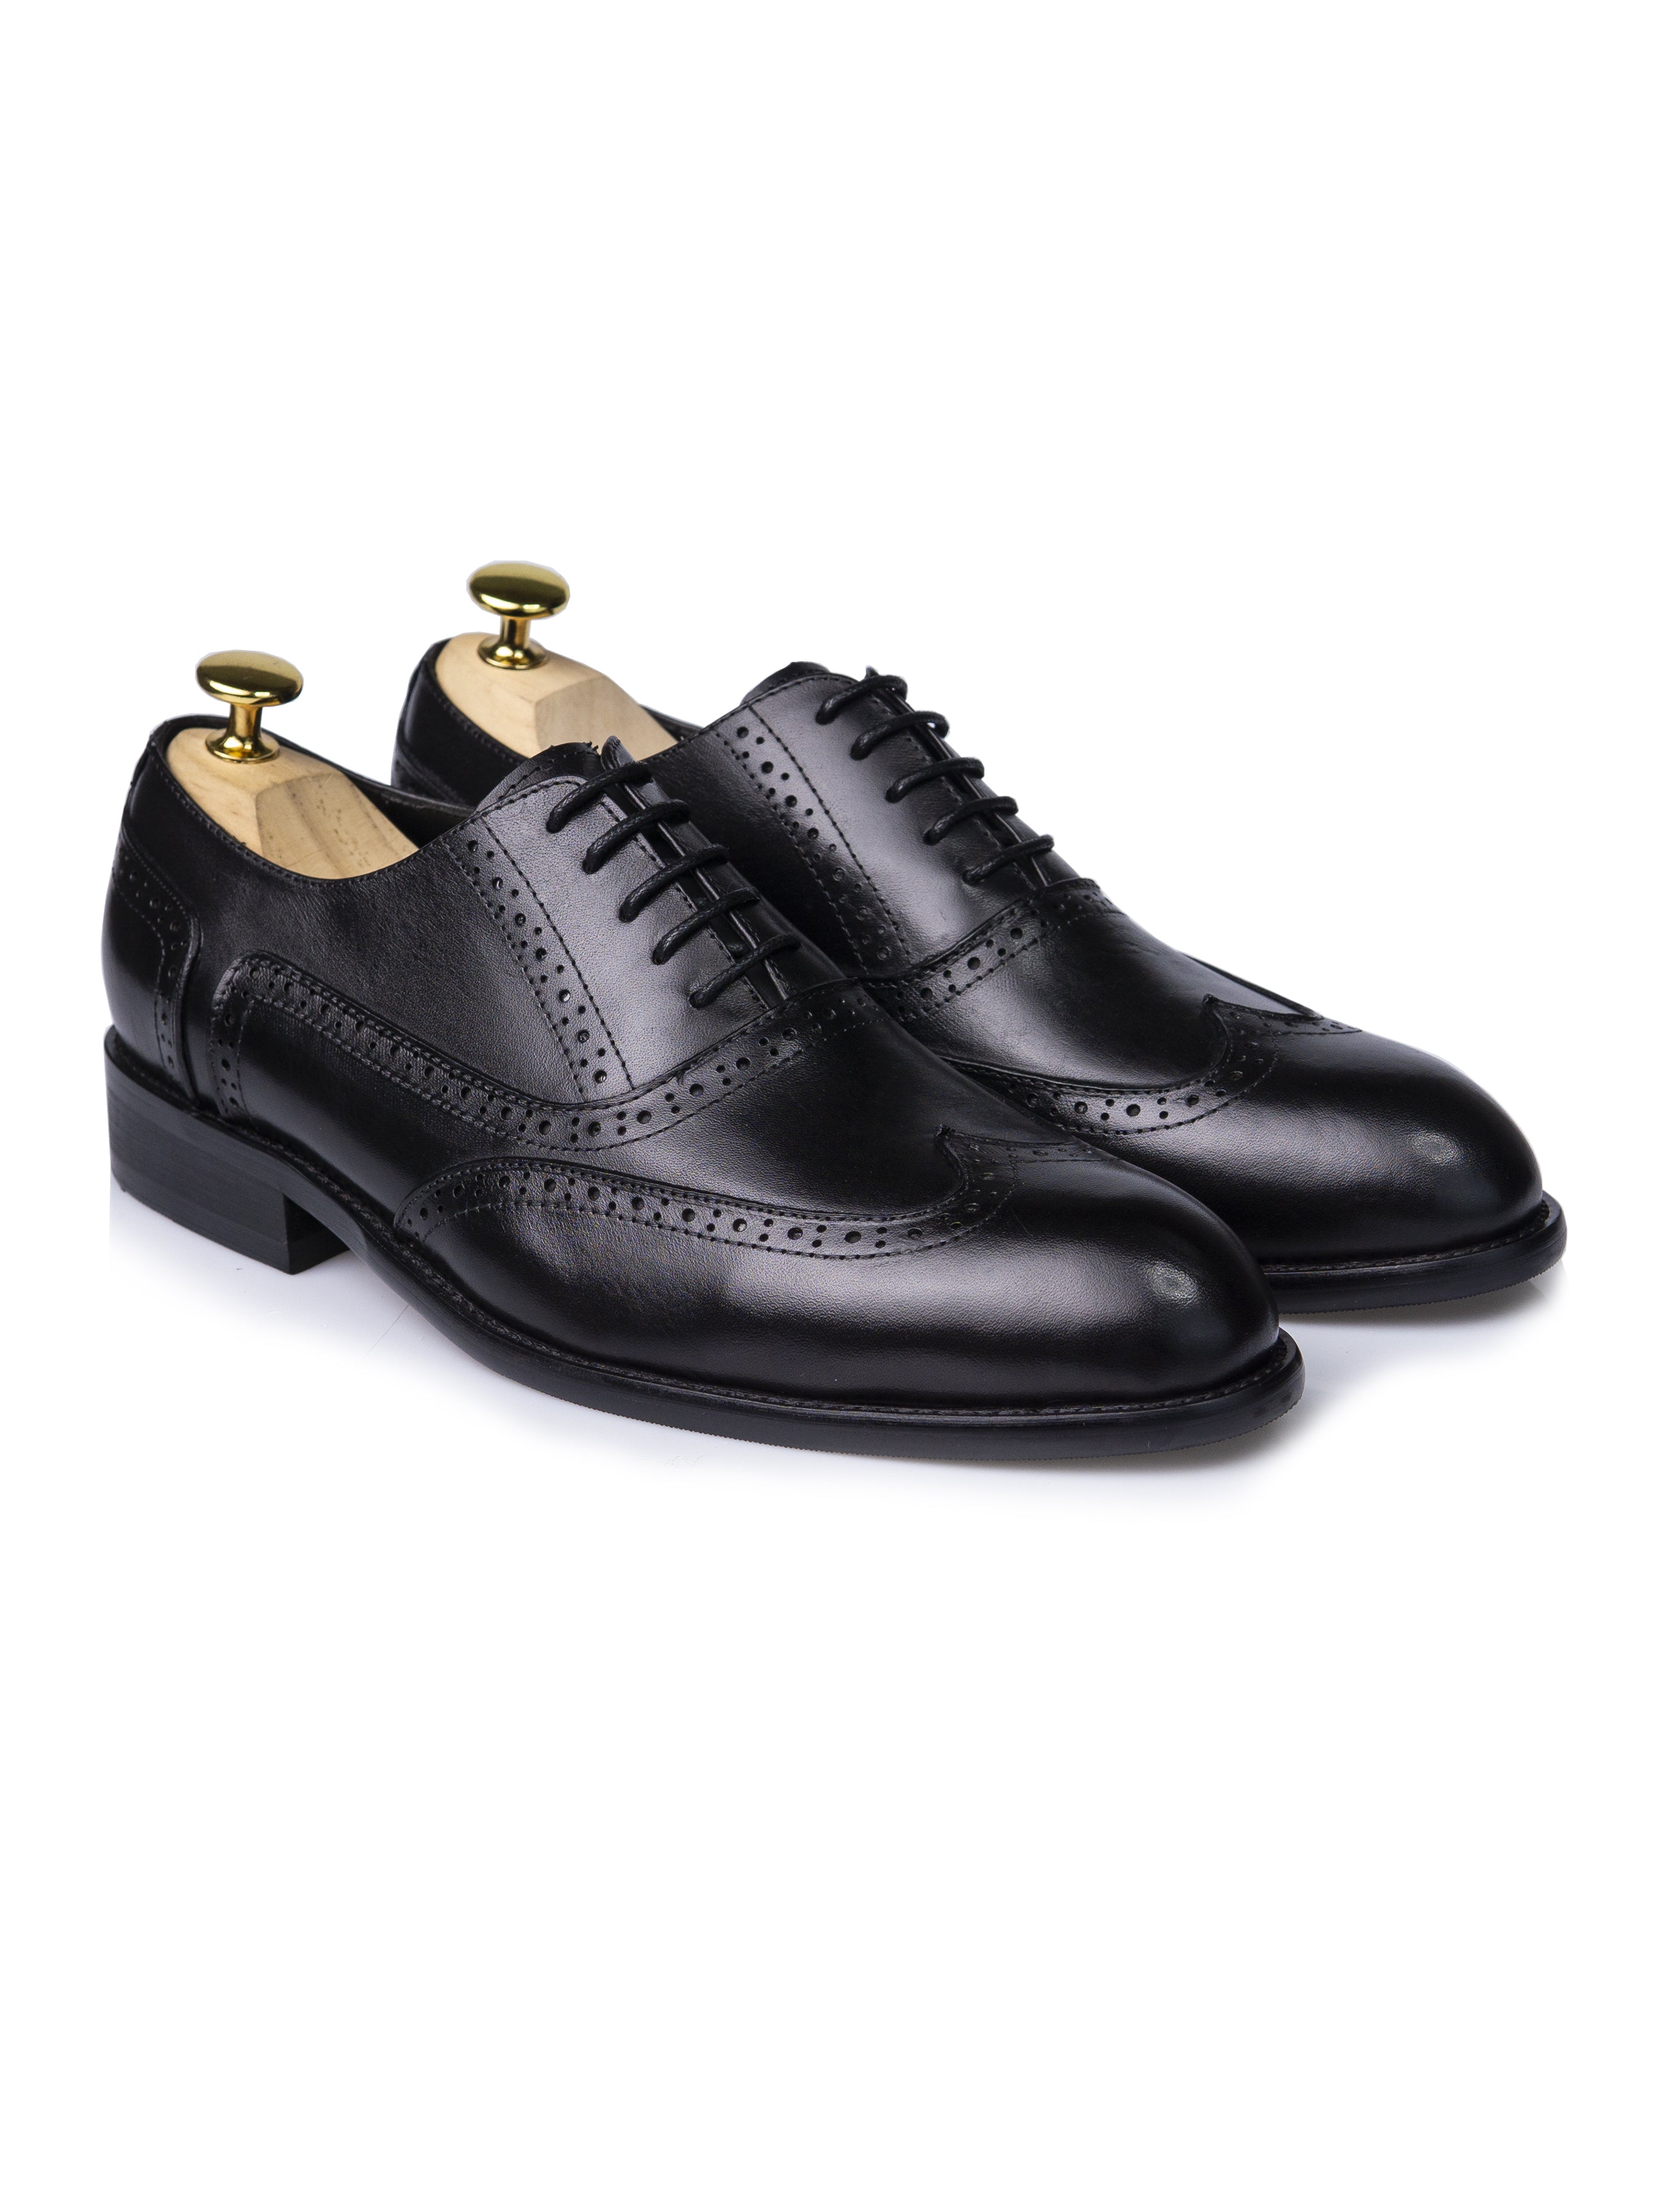 Oxford Brogue Wingtip - Black Lace Up - Zeve Shoes